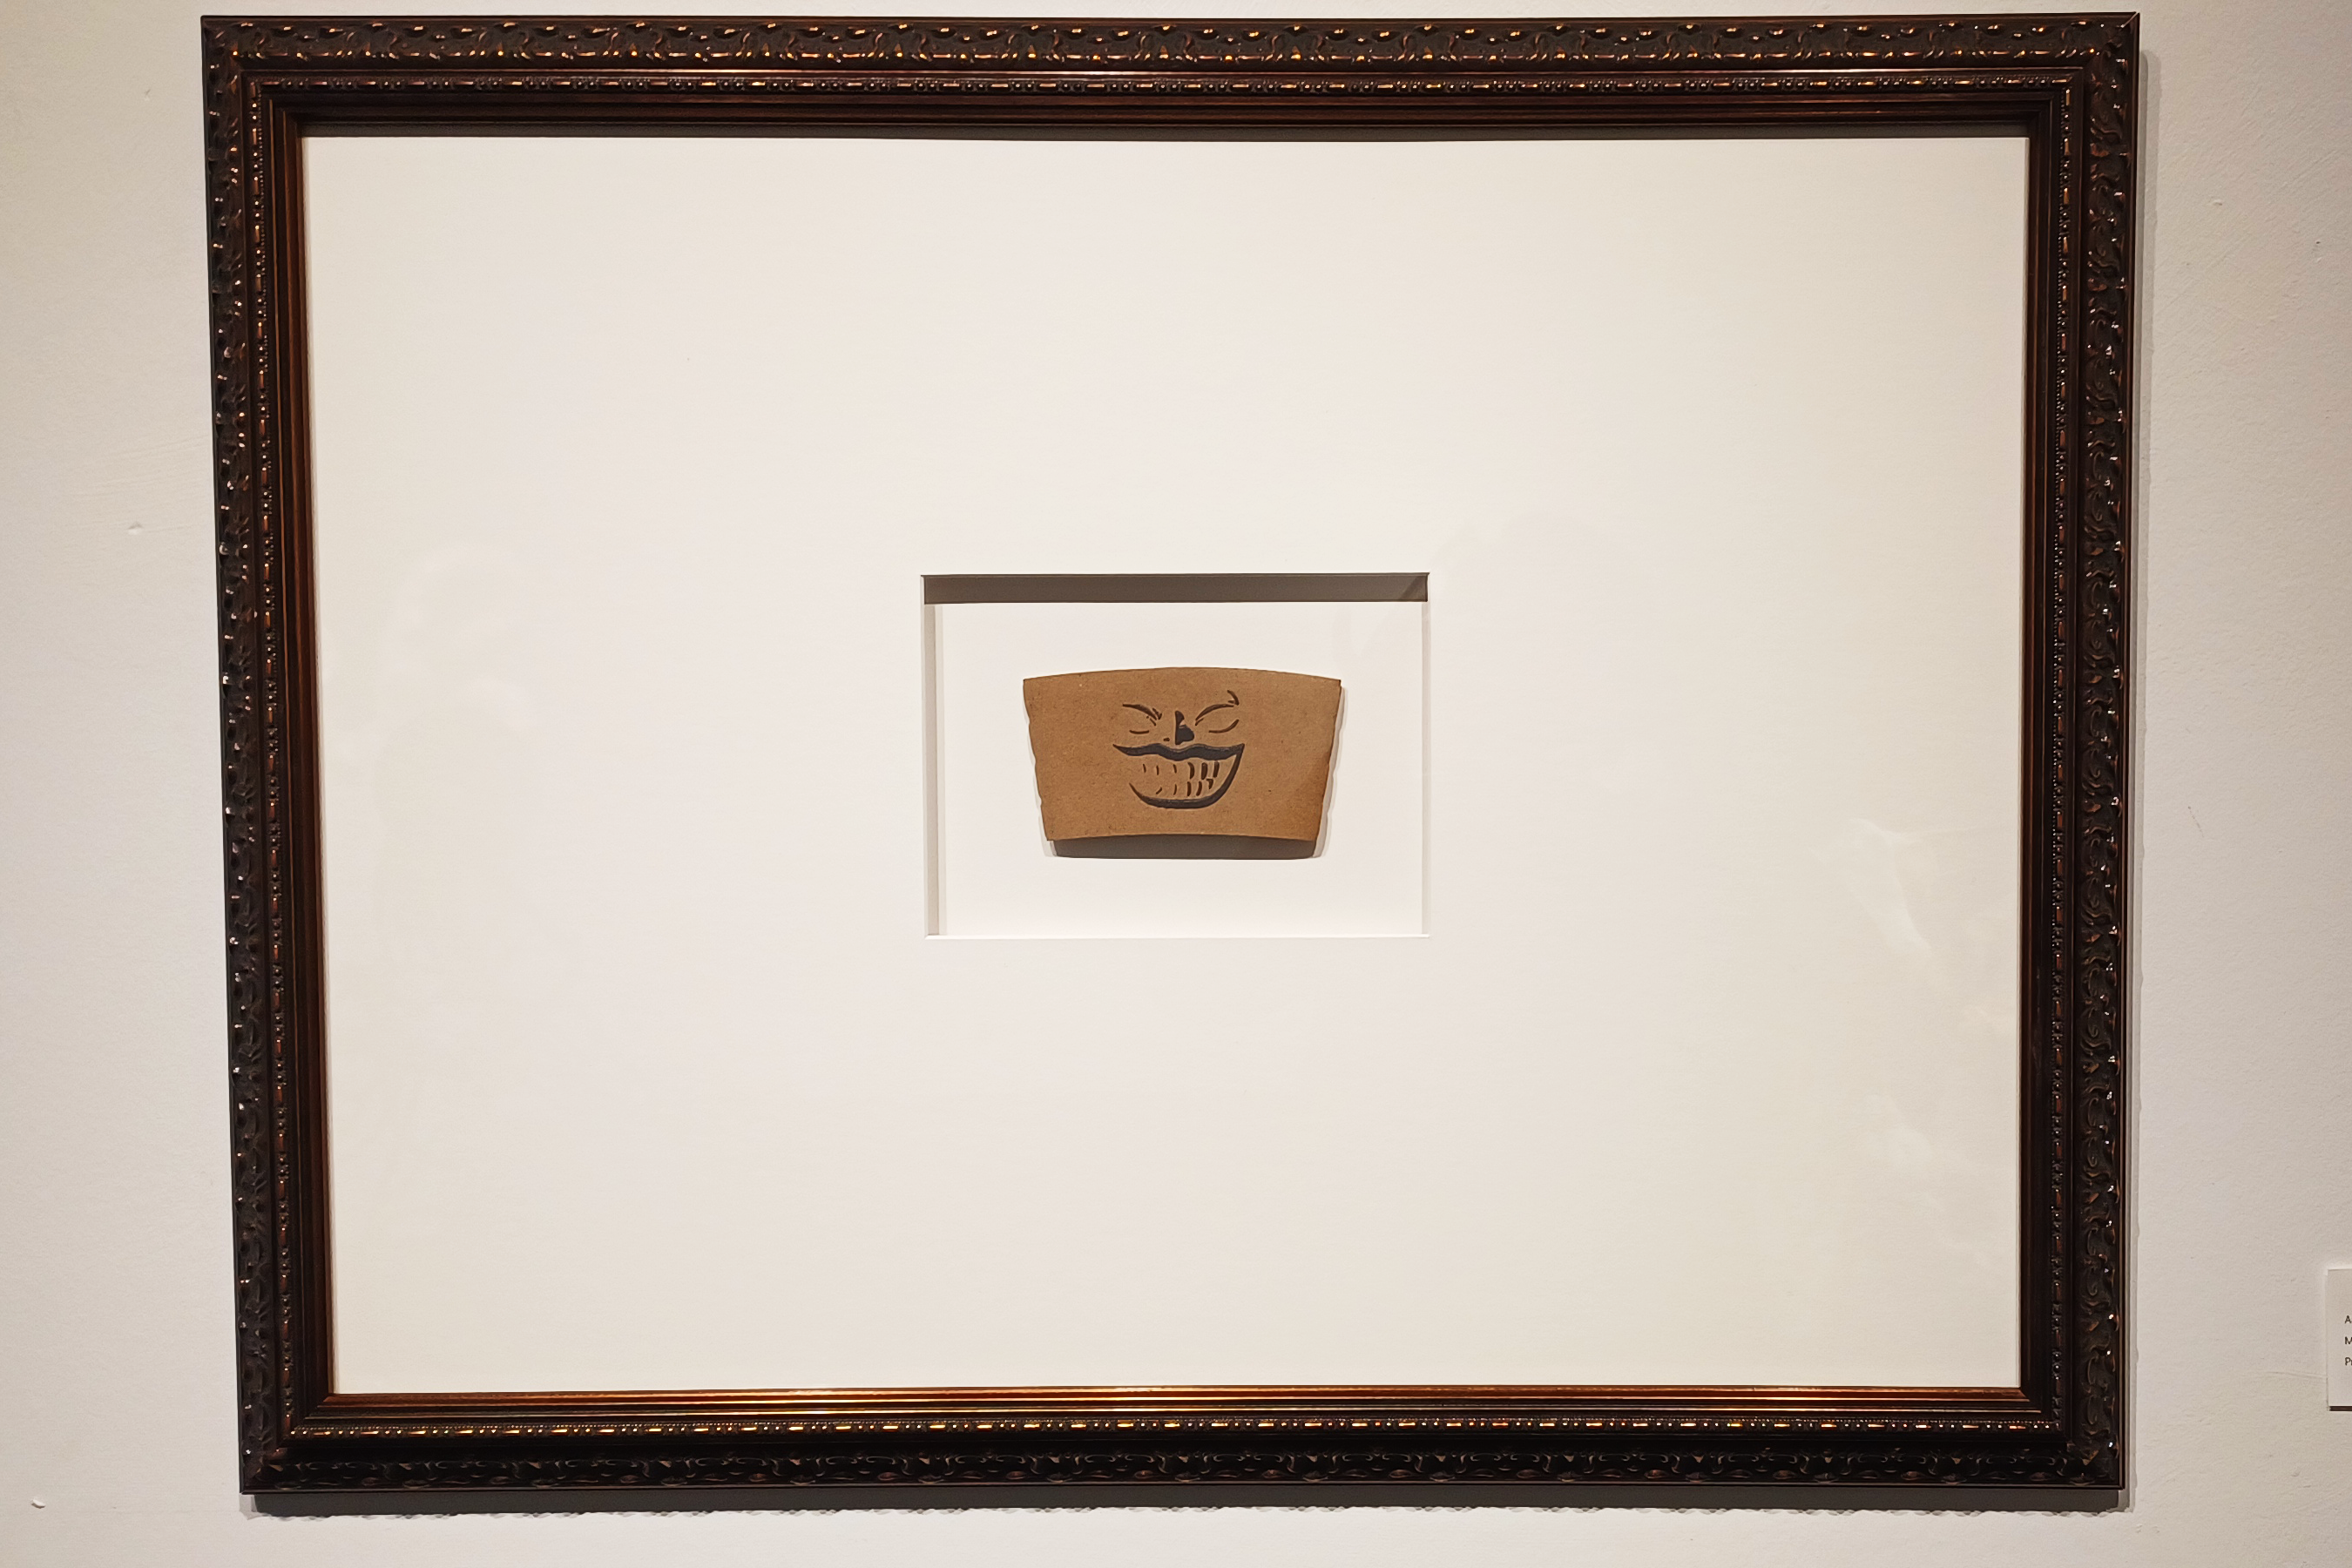 Framed print on coffee sleeve